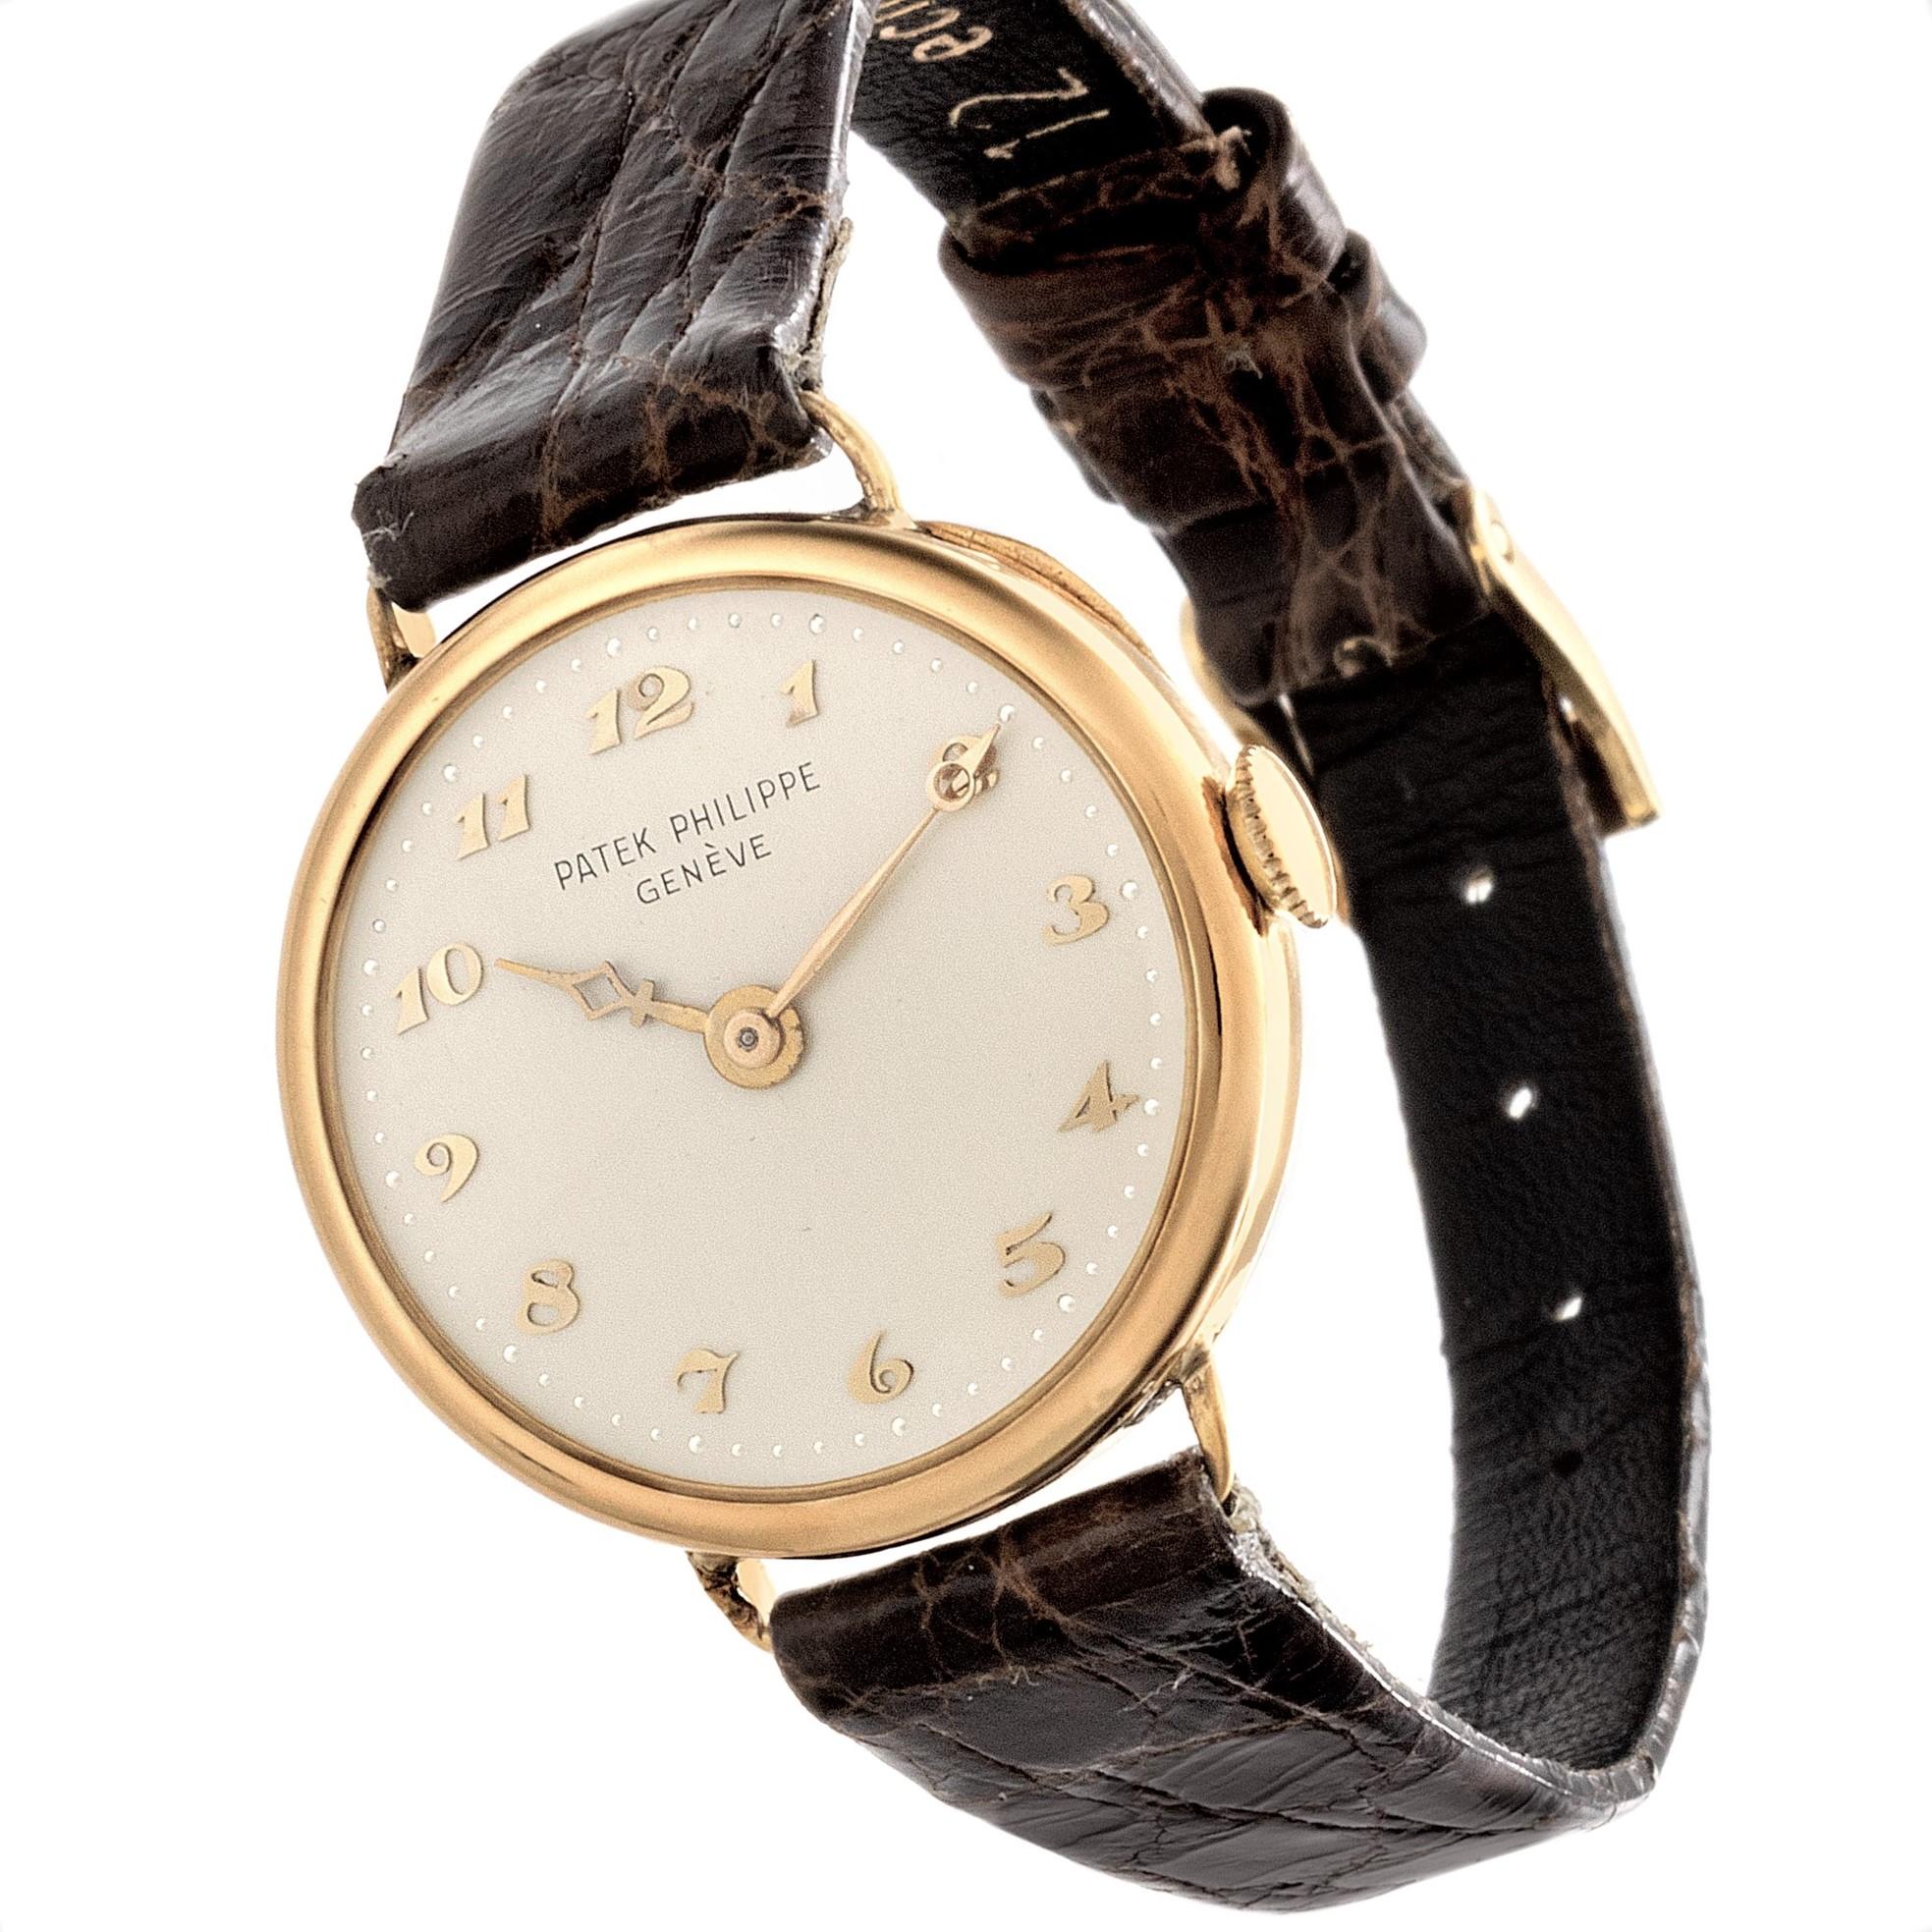 1922 watch